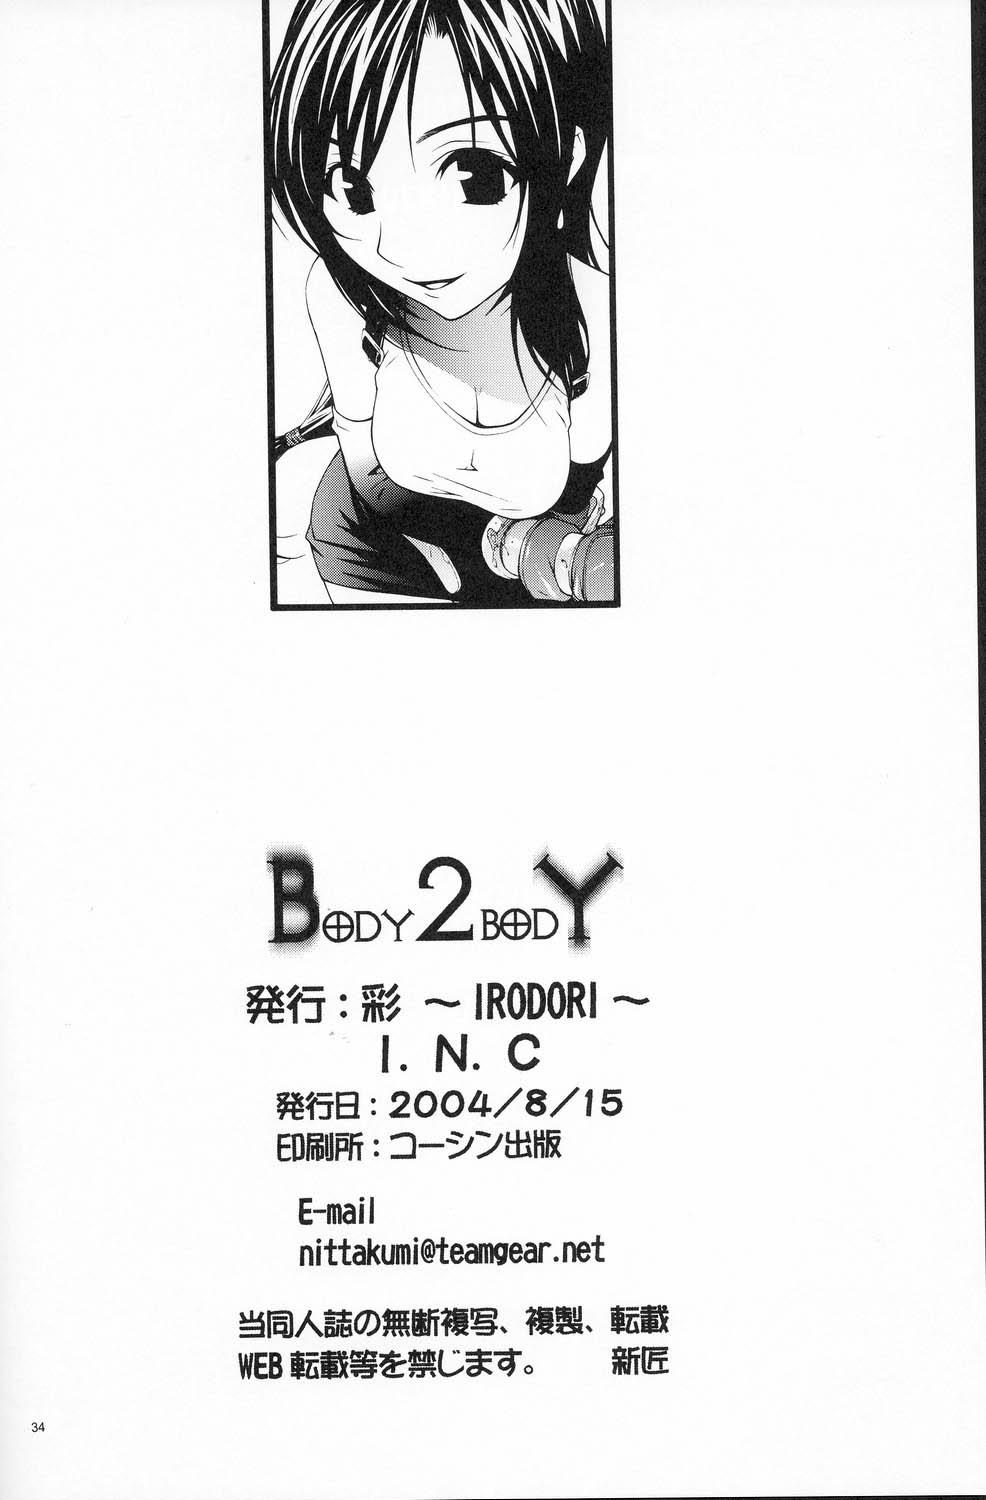 B2B - Body 2 Body 33